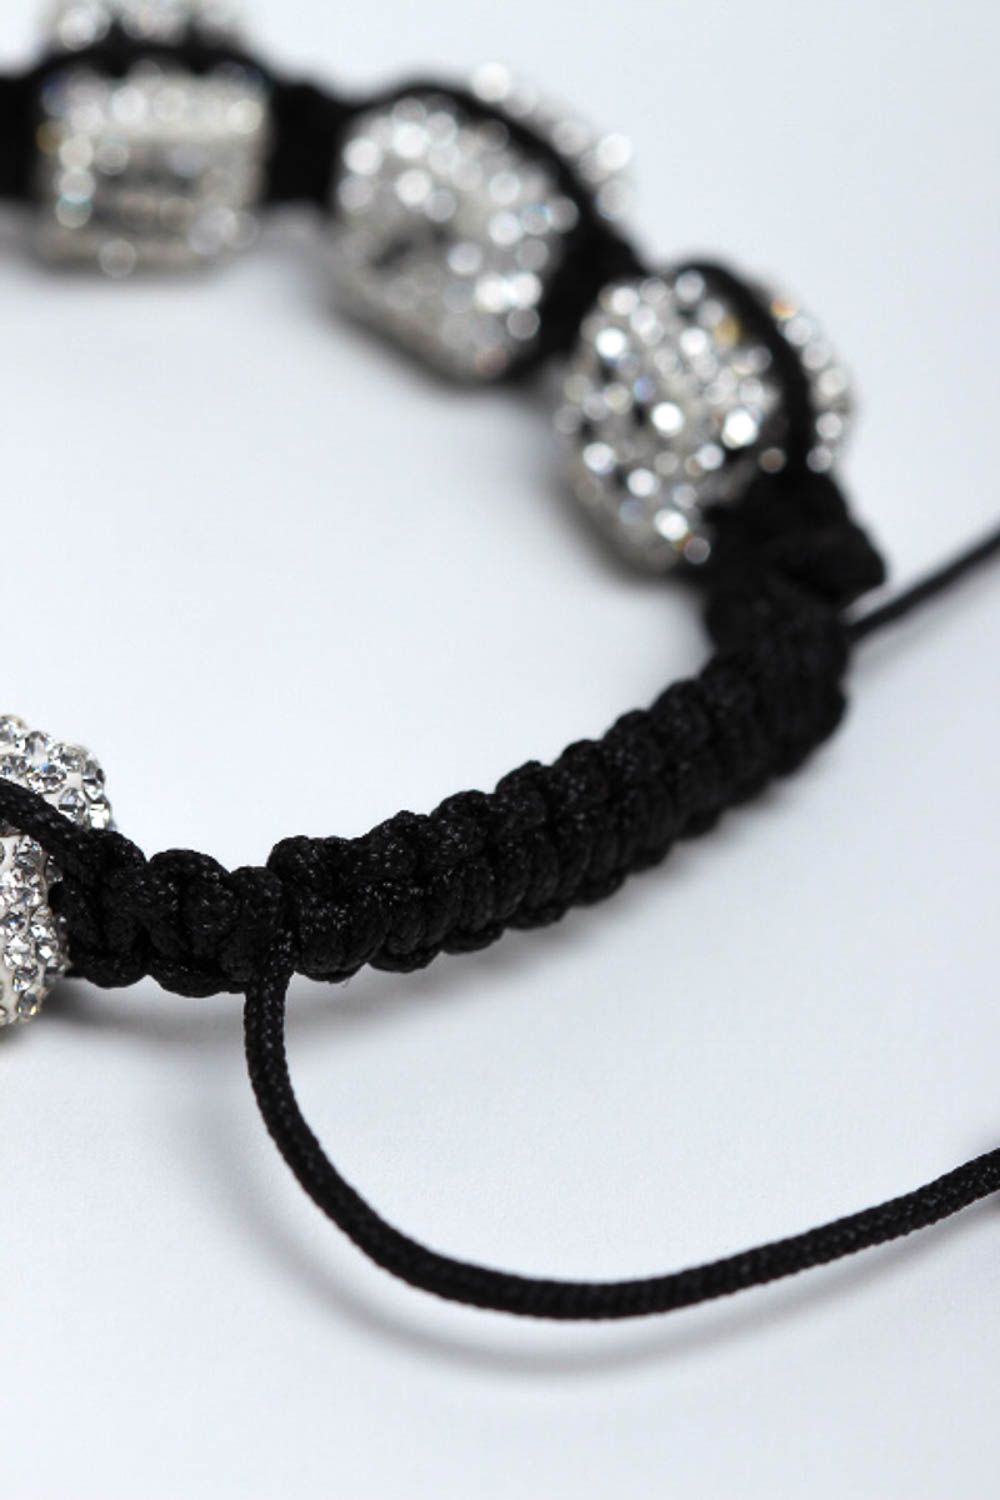 Woven bracelet handmade beaded bracelet with stylish evening jewelry for girls photo 5